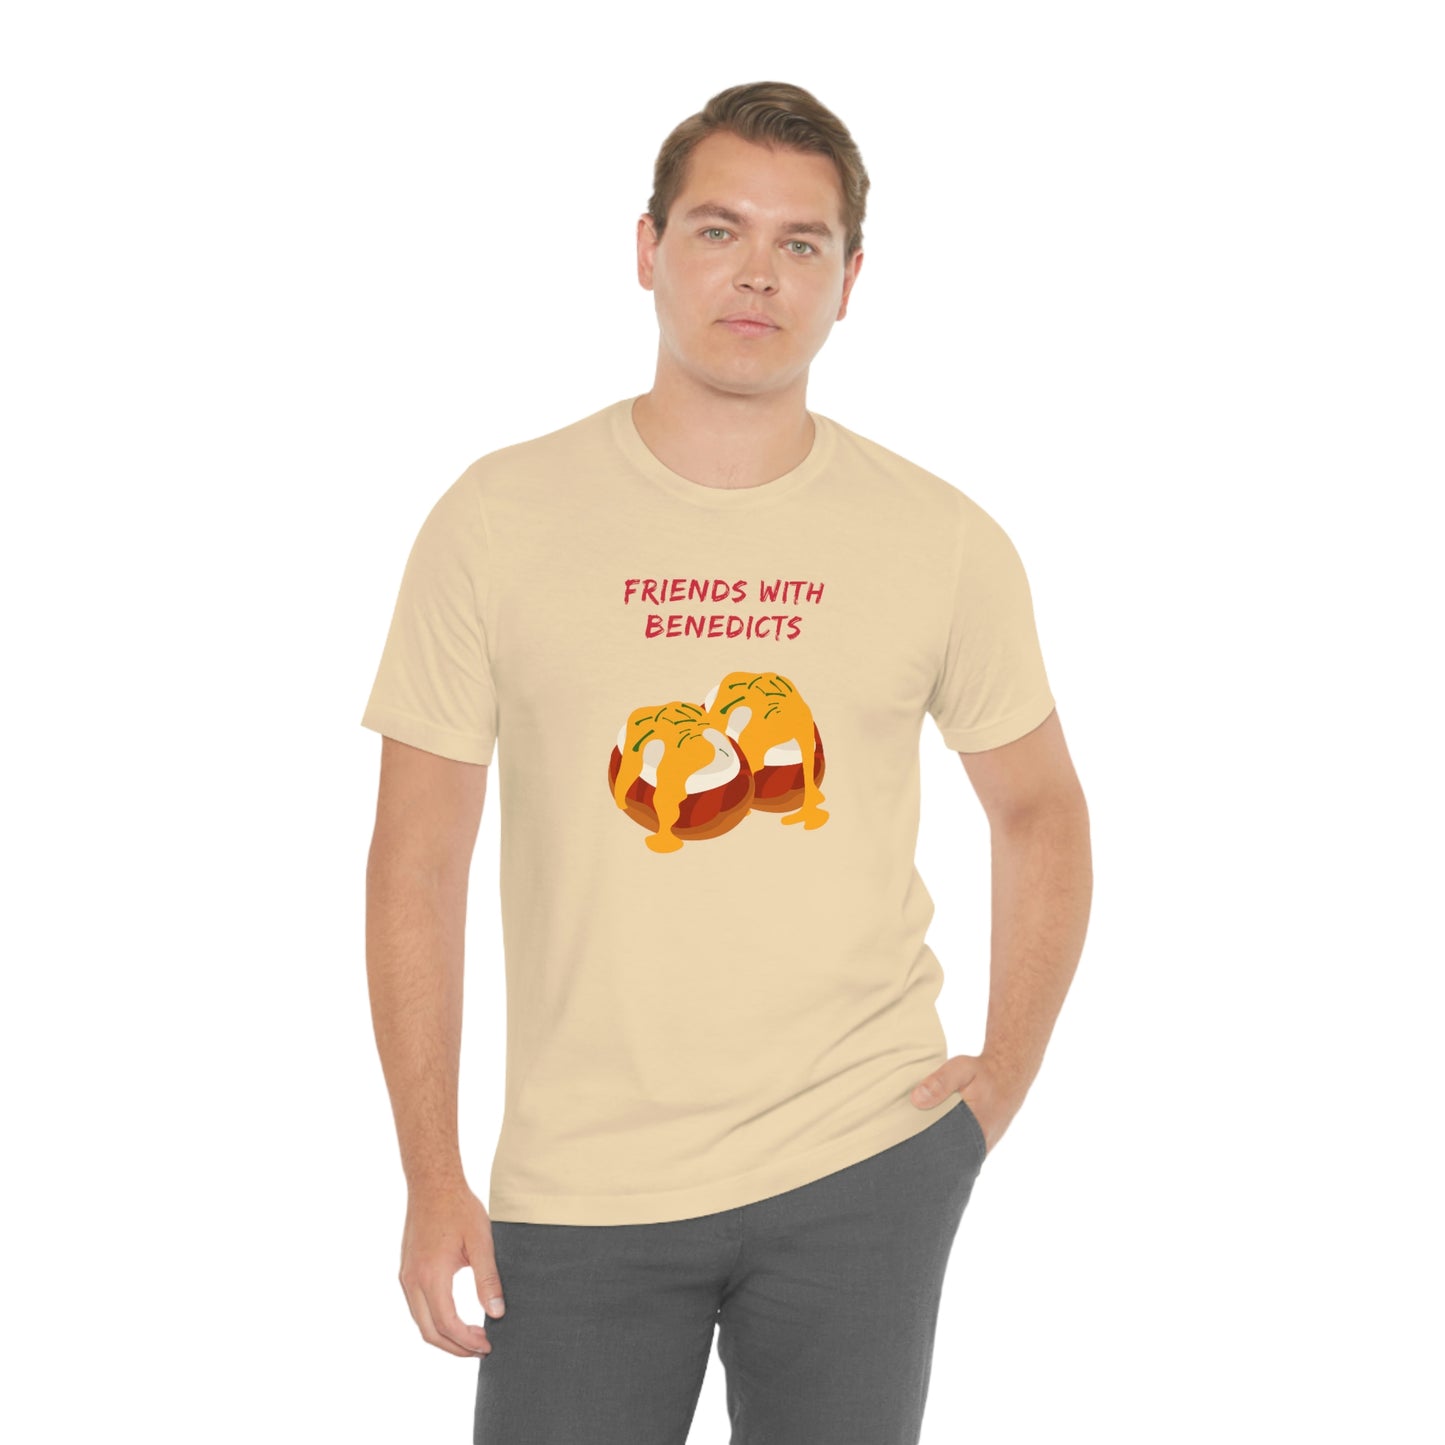 Friends with Benedicts - Men's Jersey Short Sleeve Tee - Men t shirts - Men funny tees